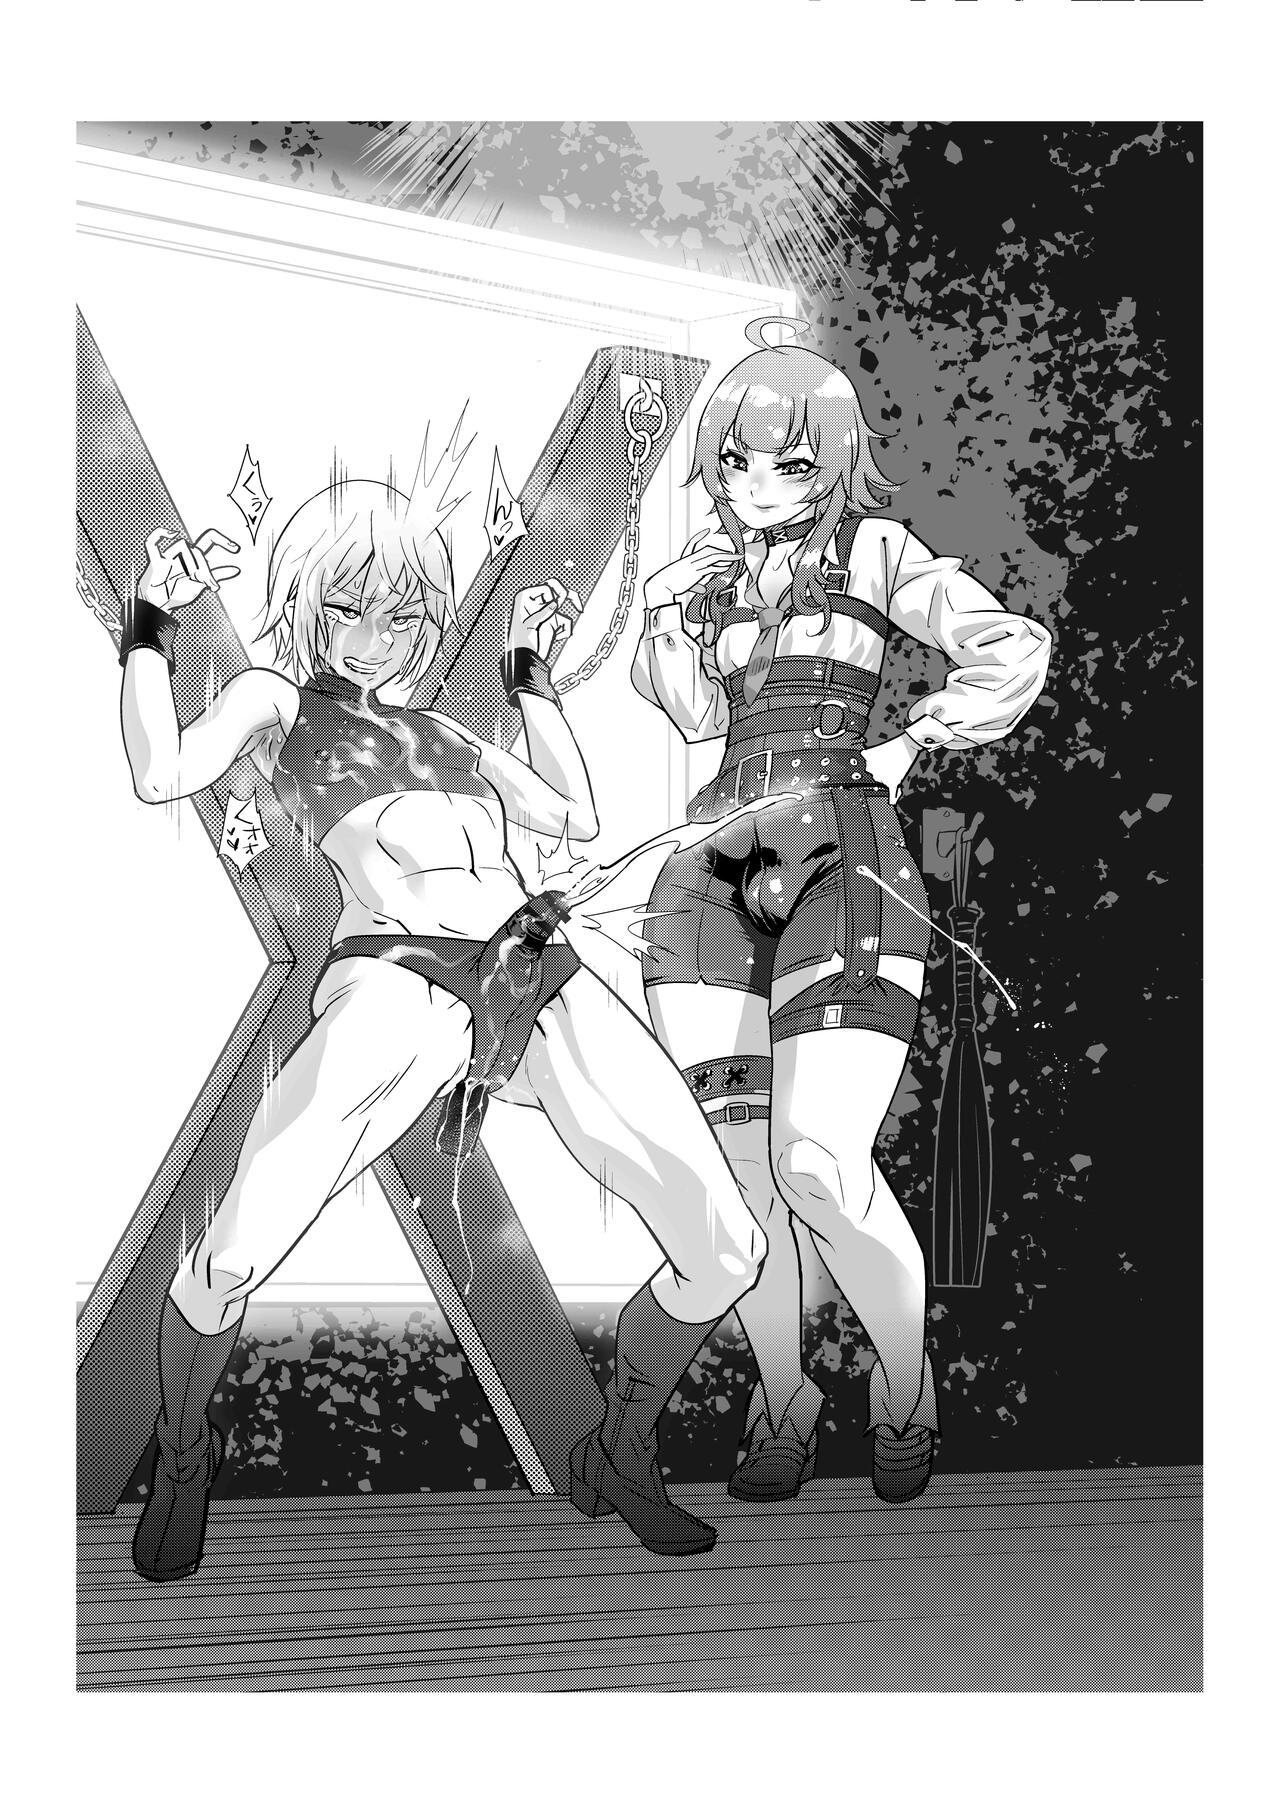 Fast Erotic Manga Vol.2 30